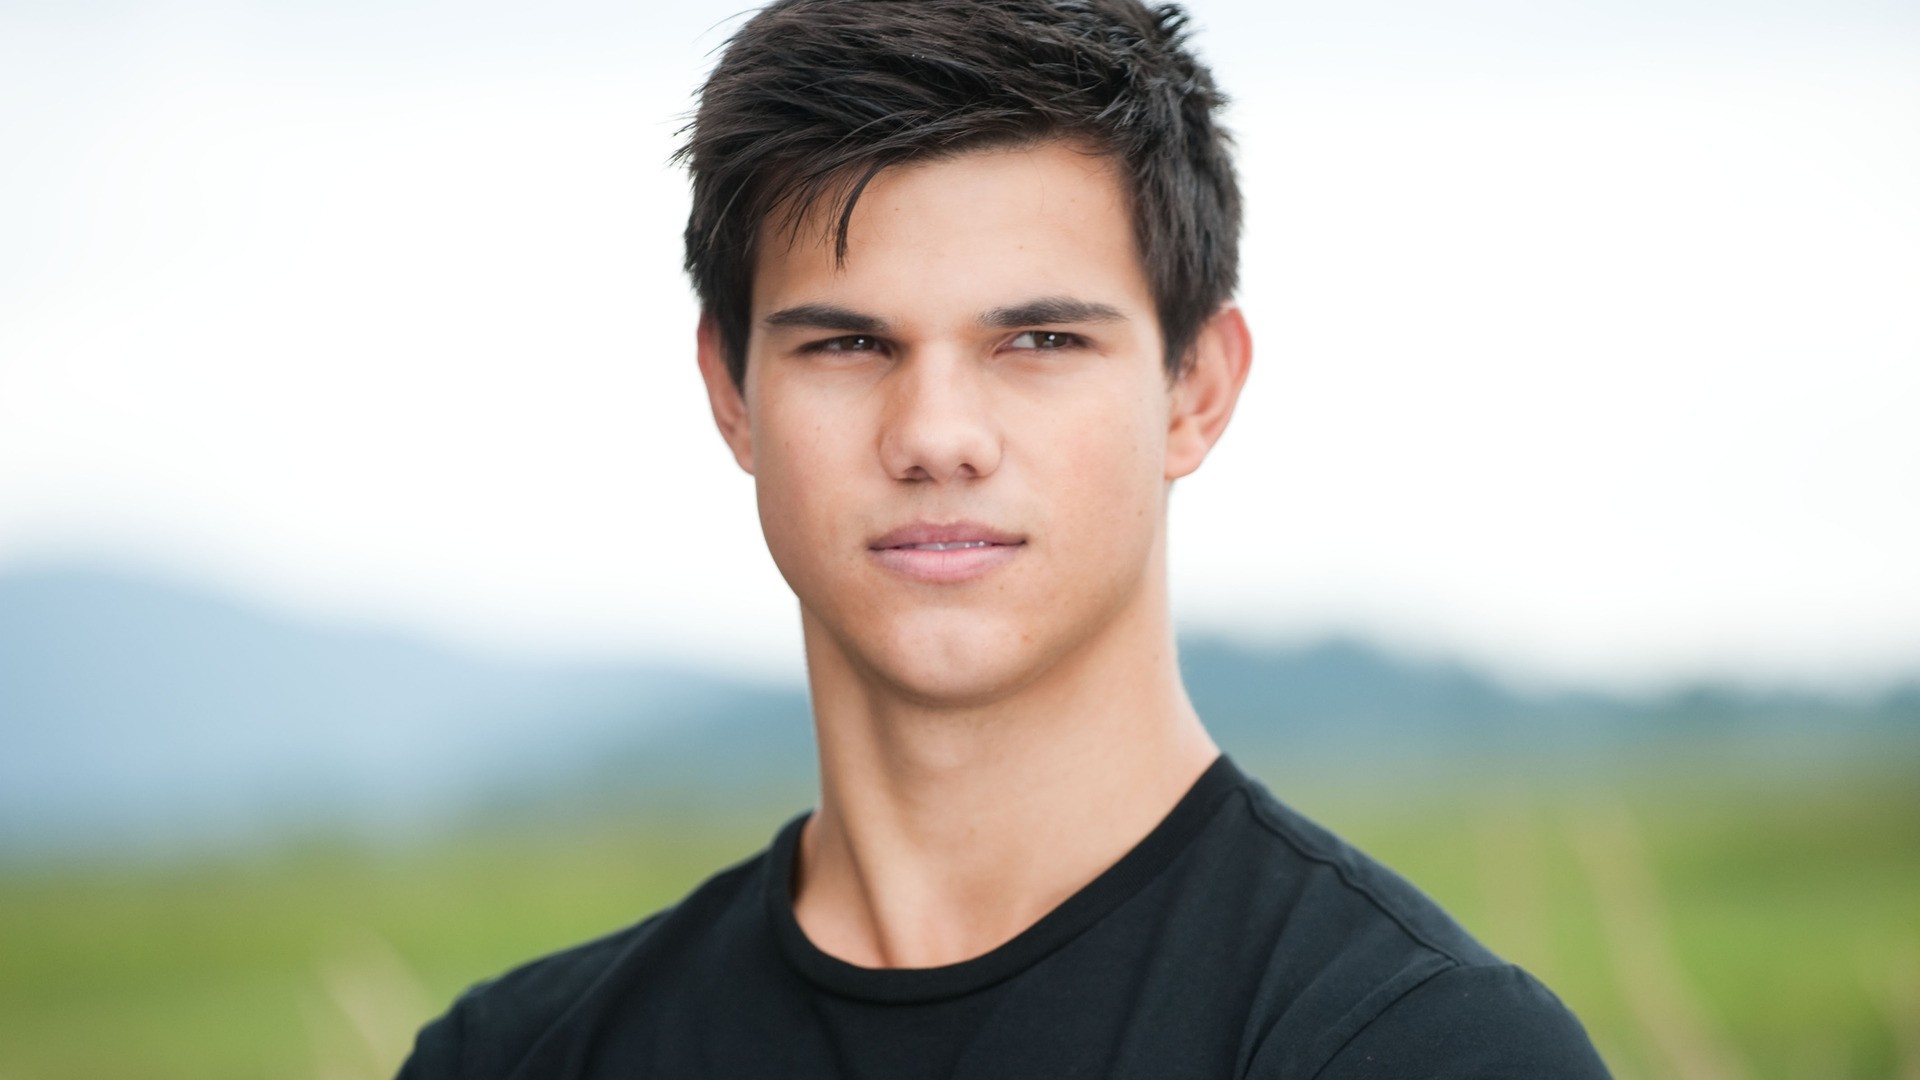 1920x1080 Taylor Lautner 2013 TaylorLautner HD Wallpaper Taylor Lautner 2013 .